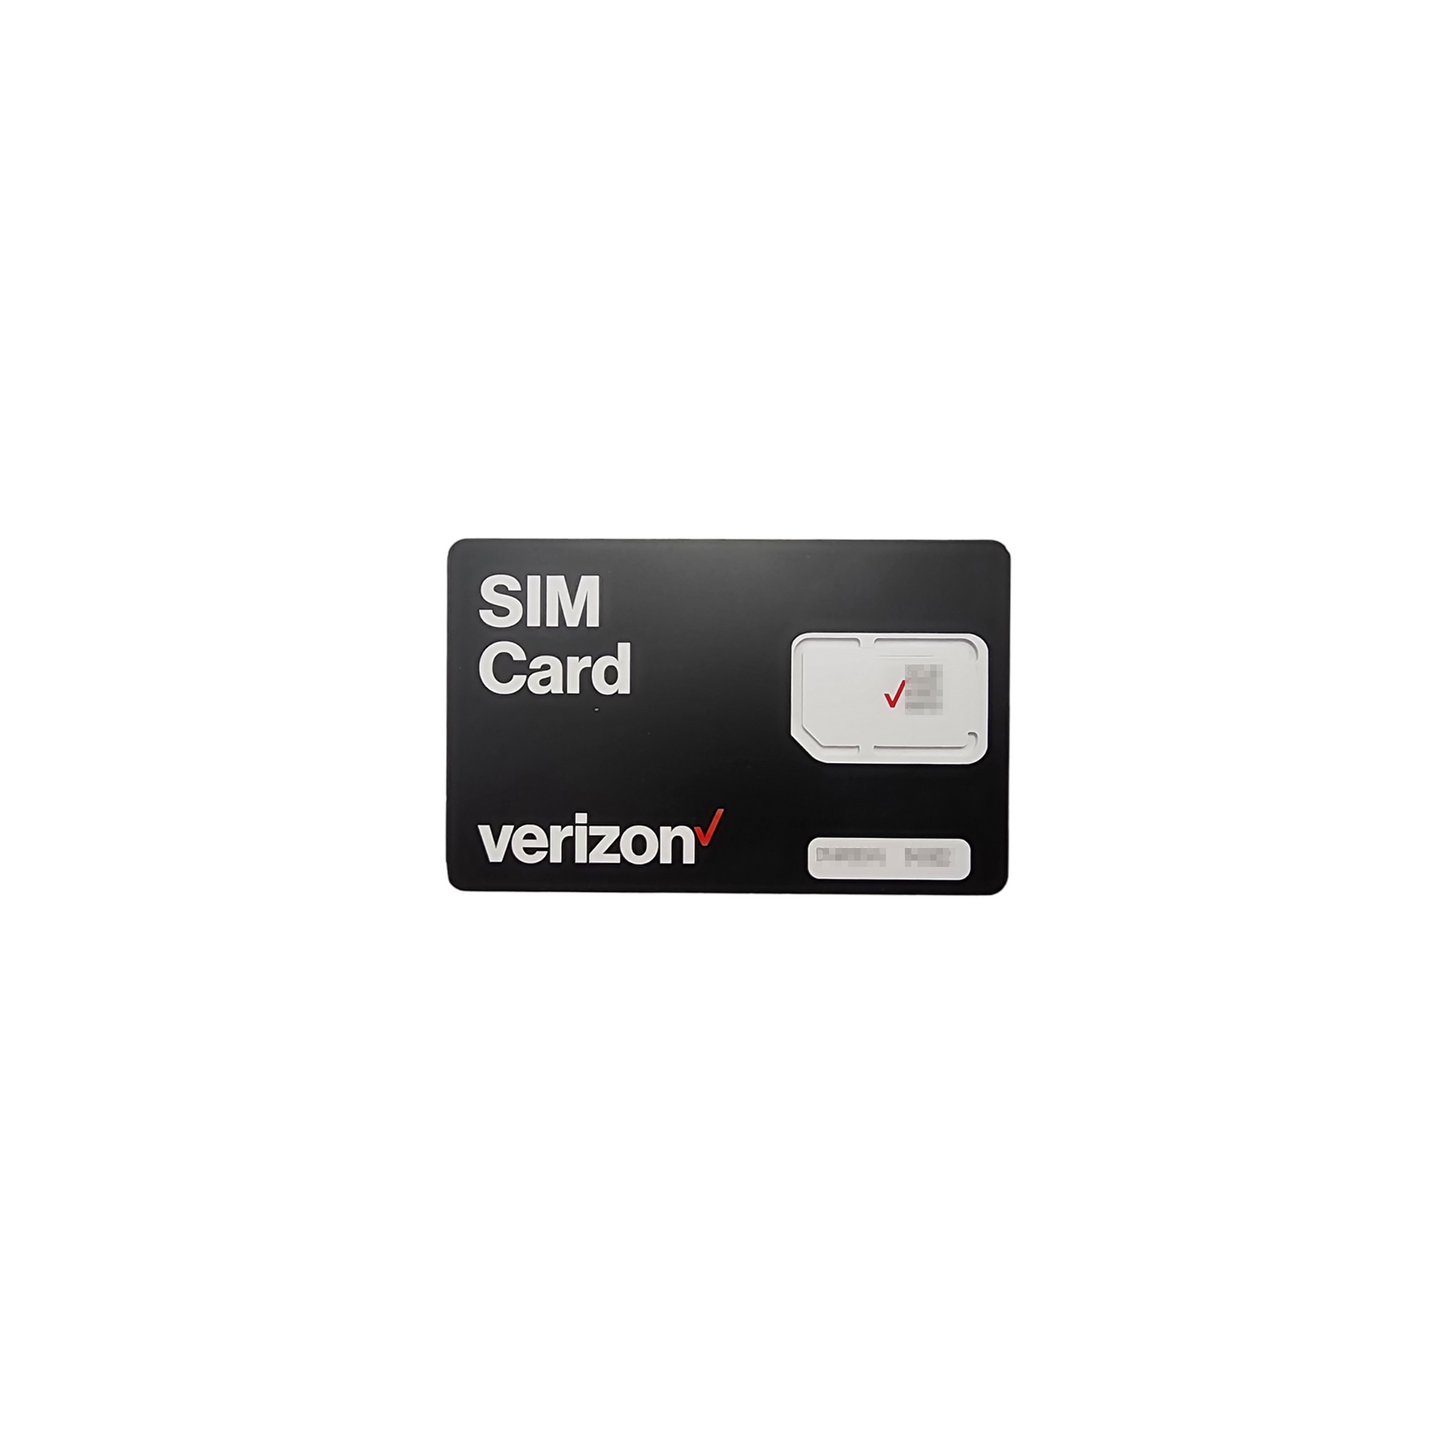 Verizon SIM card three punch front side.